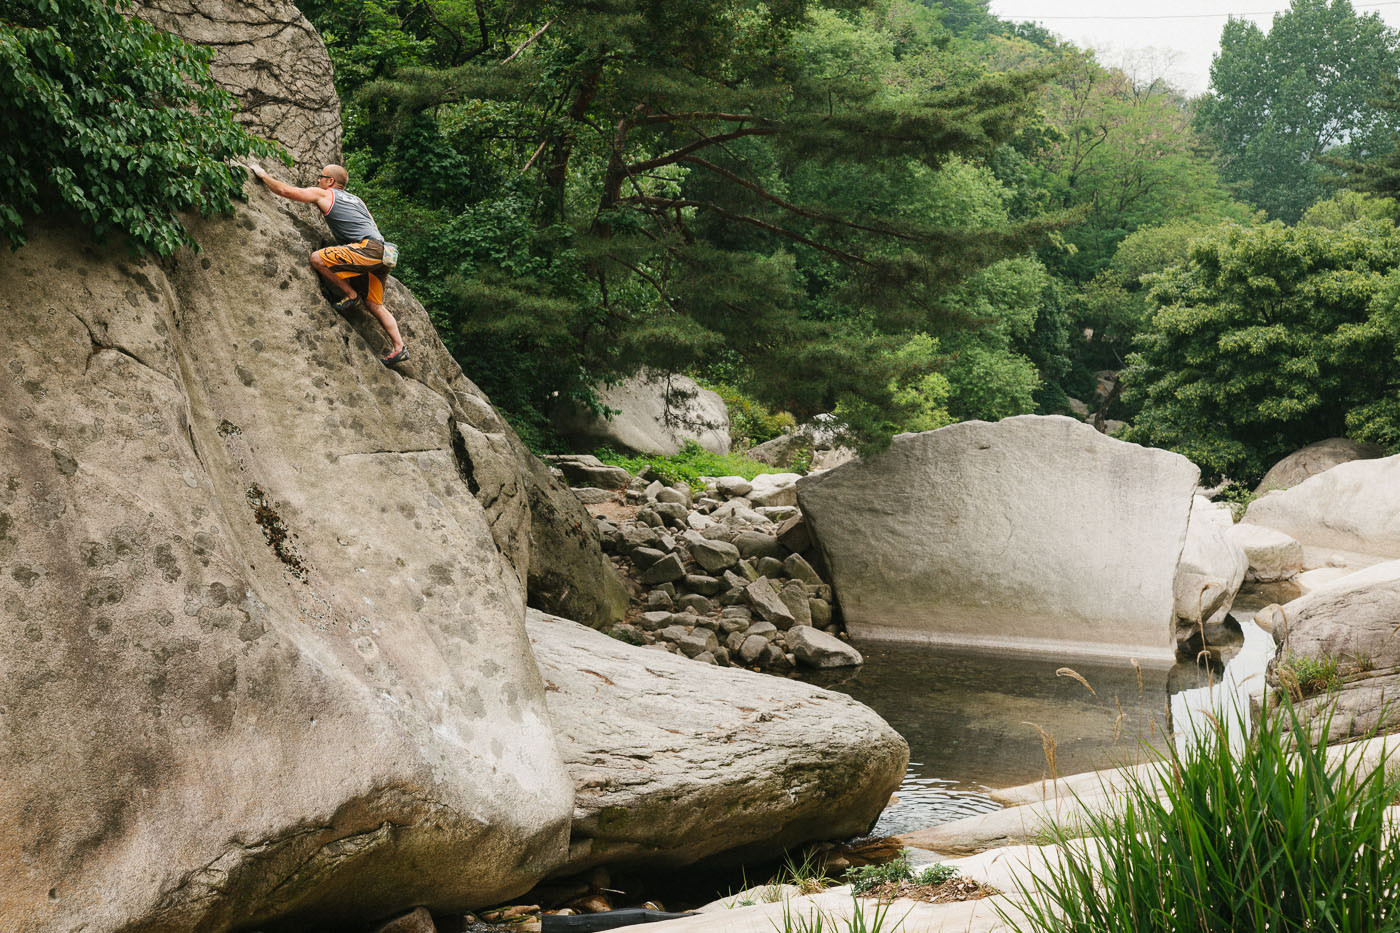 Dave McAllister climbs Vertical Twister at the Riverbeds in Bukansan National Park, South Korea